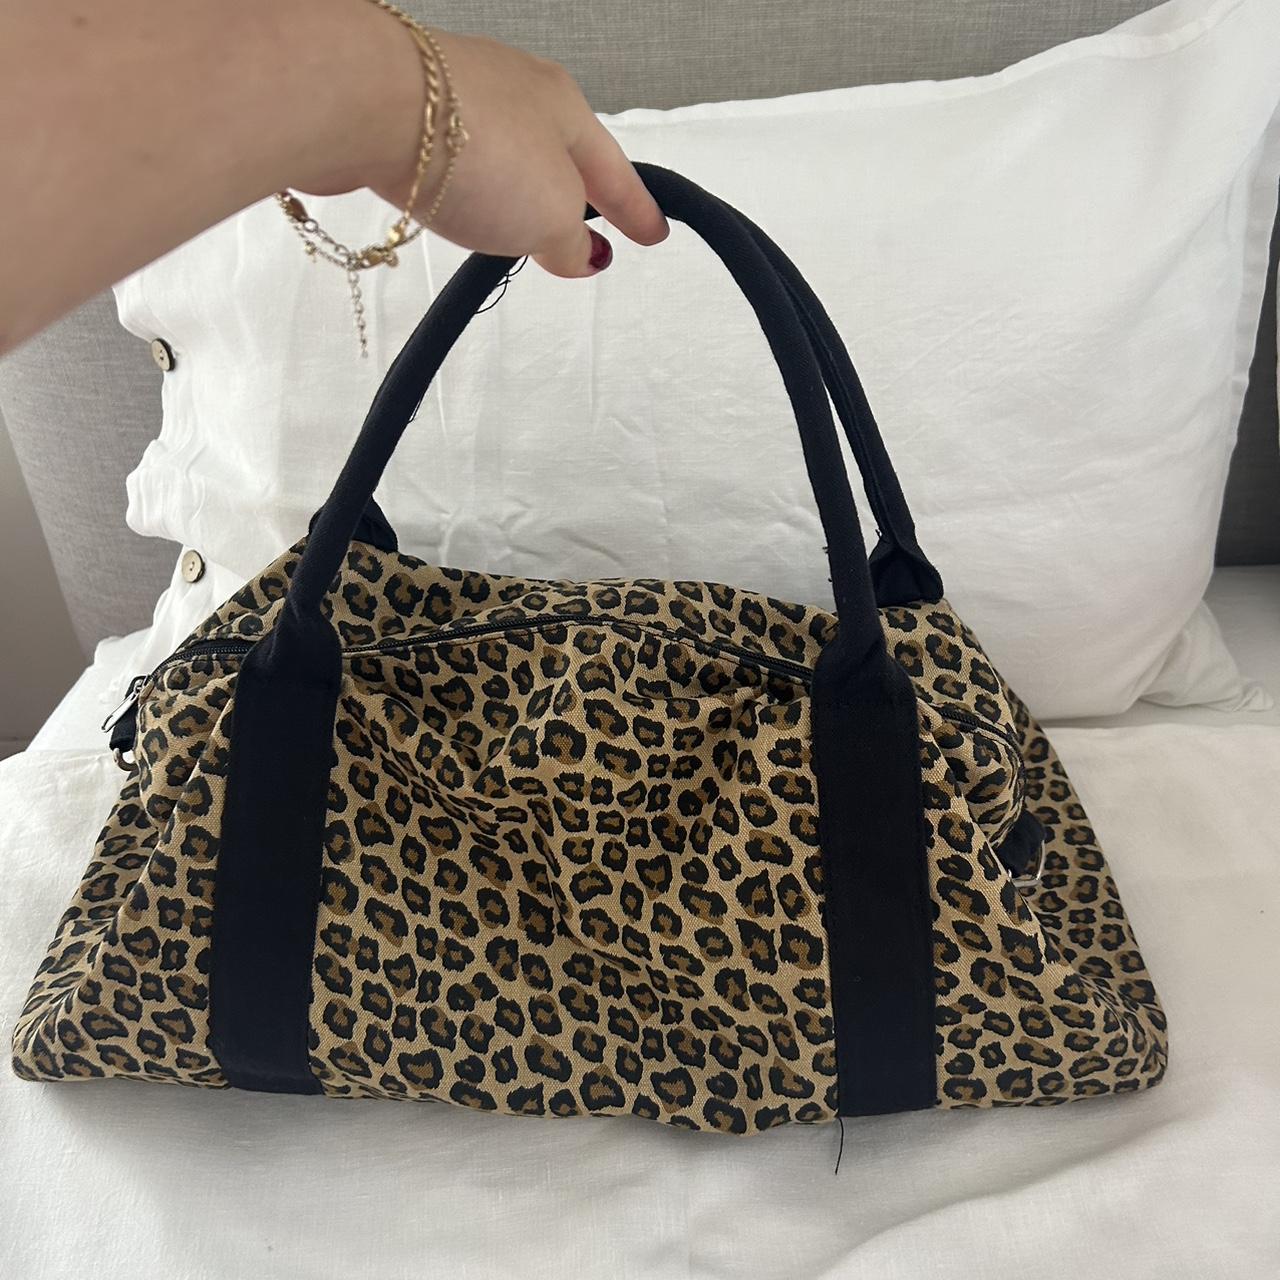 Absolutely insane cheetah print mini duffel bag No... - Depop